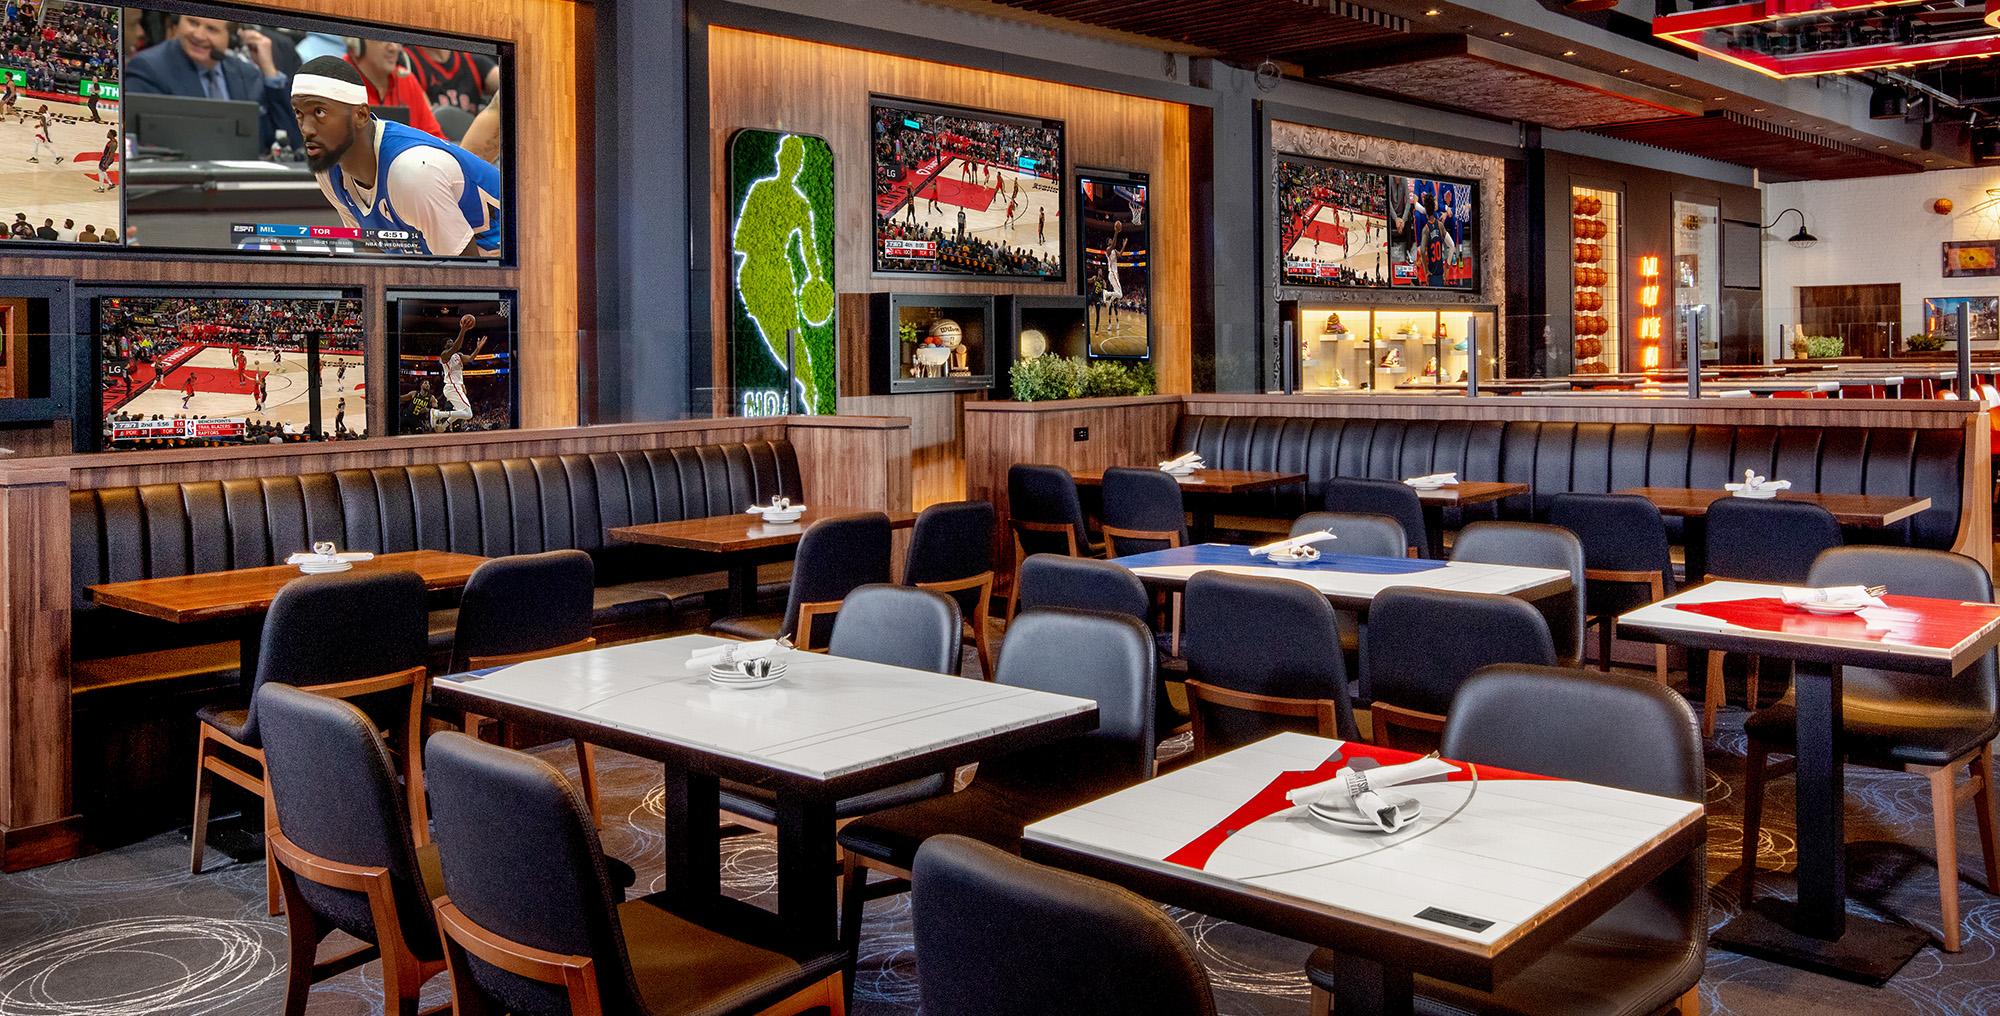 NBA Courtside Restaurant Interior Dining Room